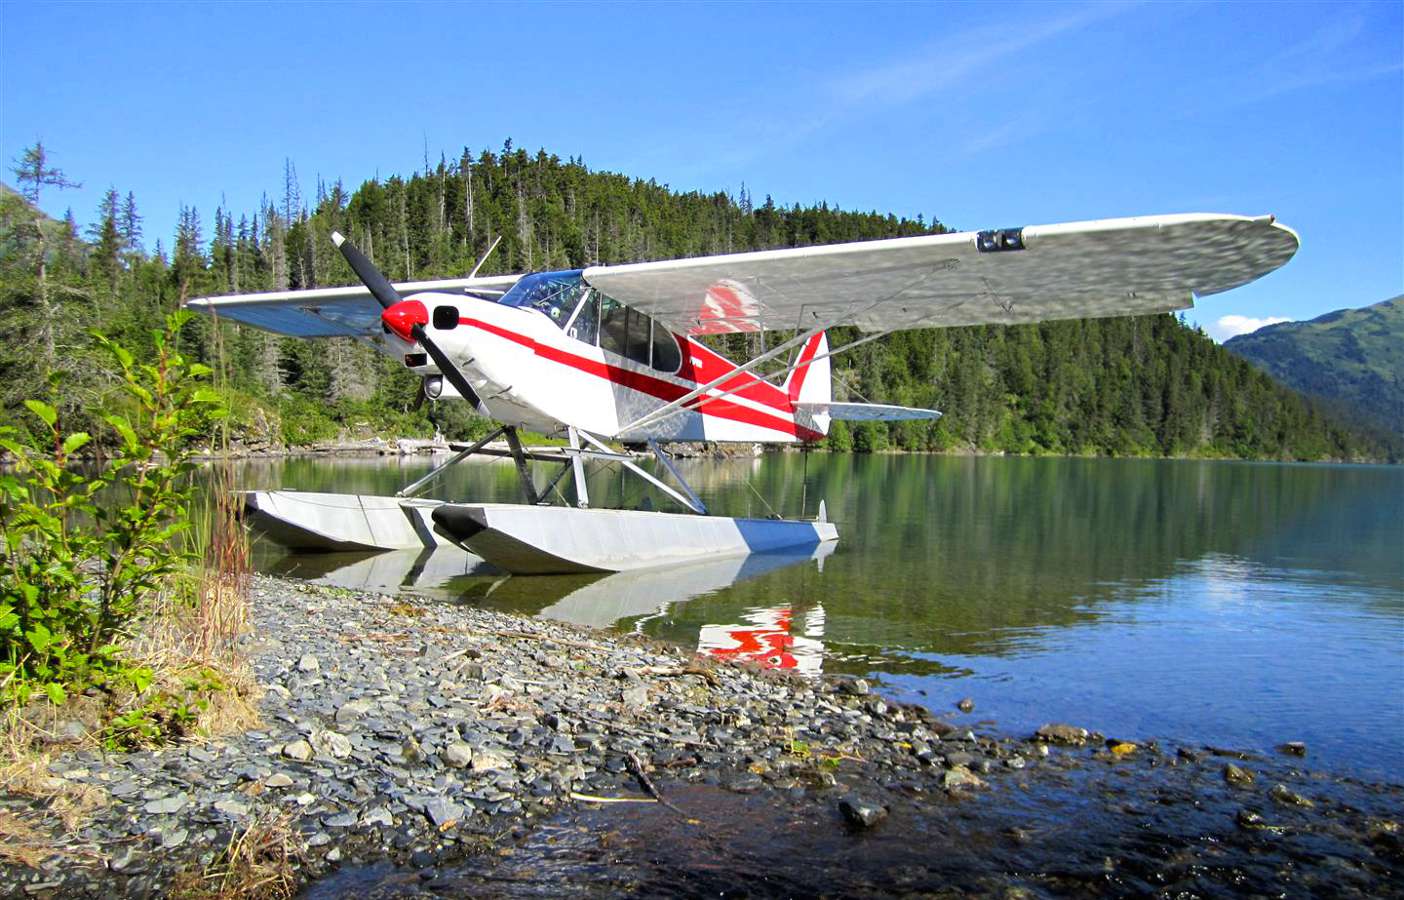 A seaplane docked in a small Alaskan glacial lake.